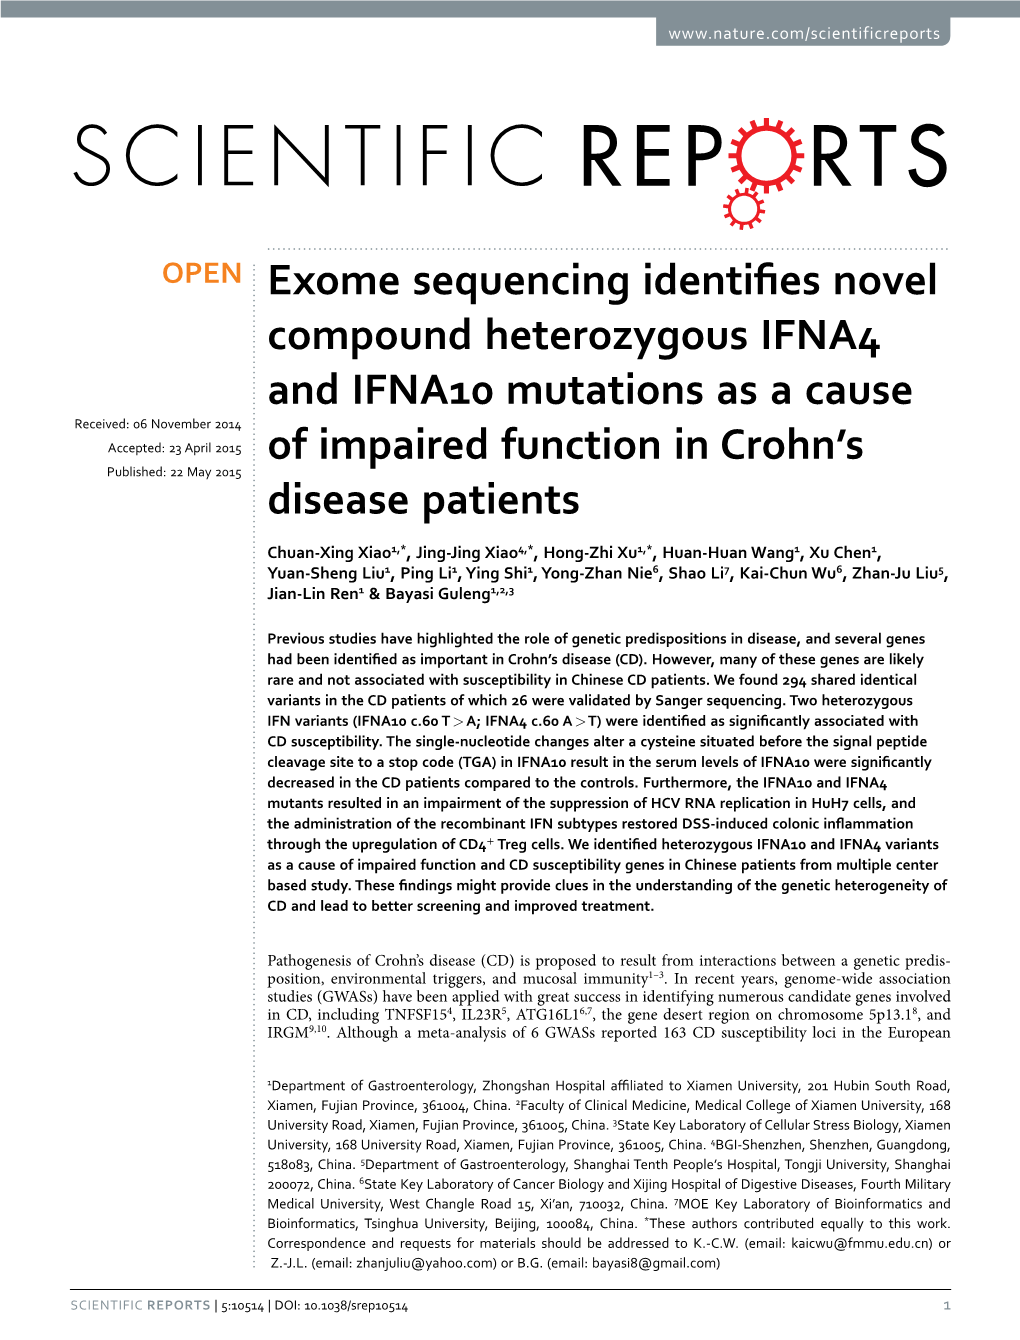 Exome Sequencing Identifies Novel Compound Heterozygous IFNA4